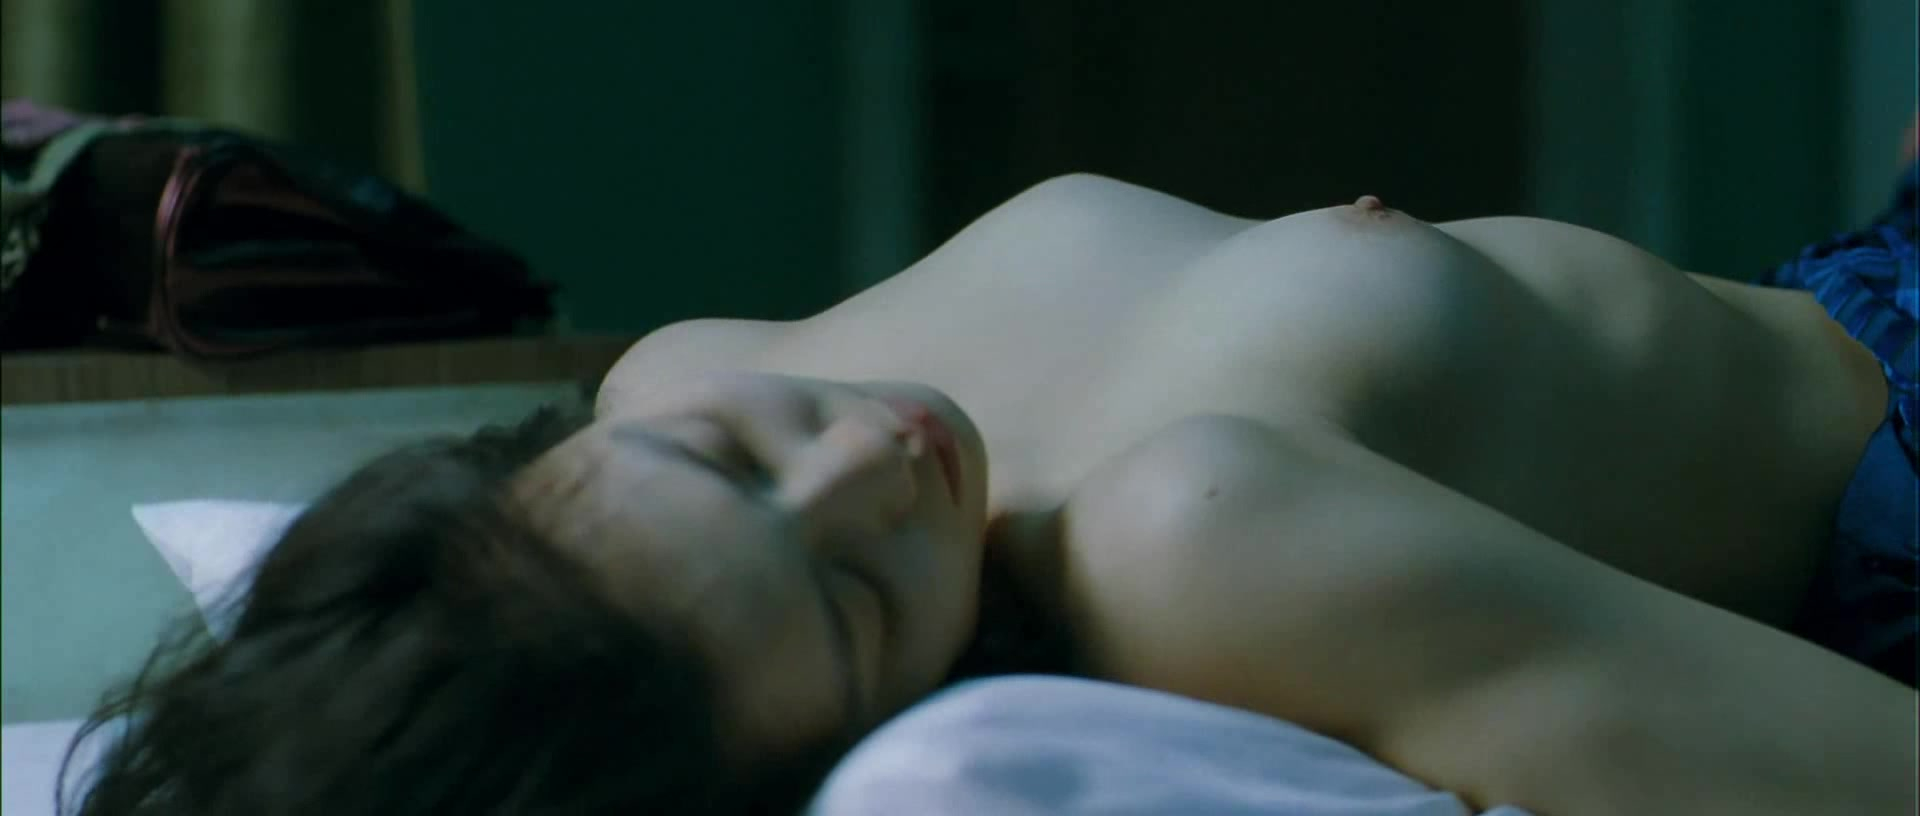 Kim Ok-bin nude - Thirst (2009)